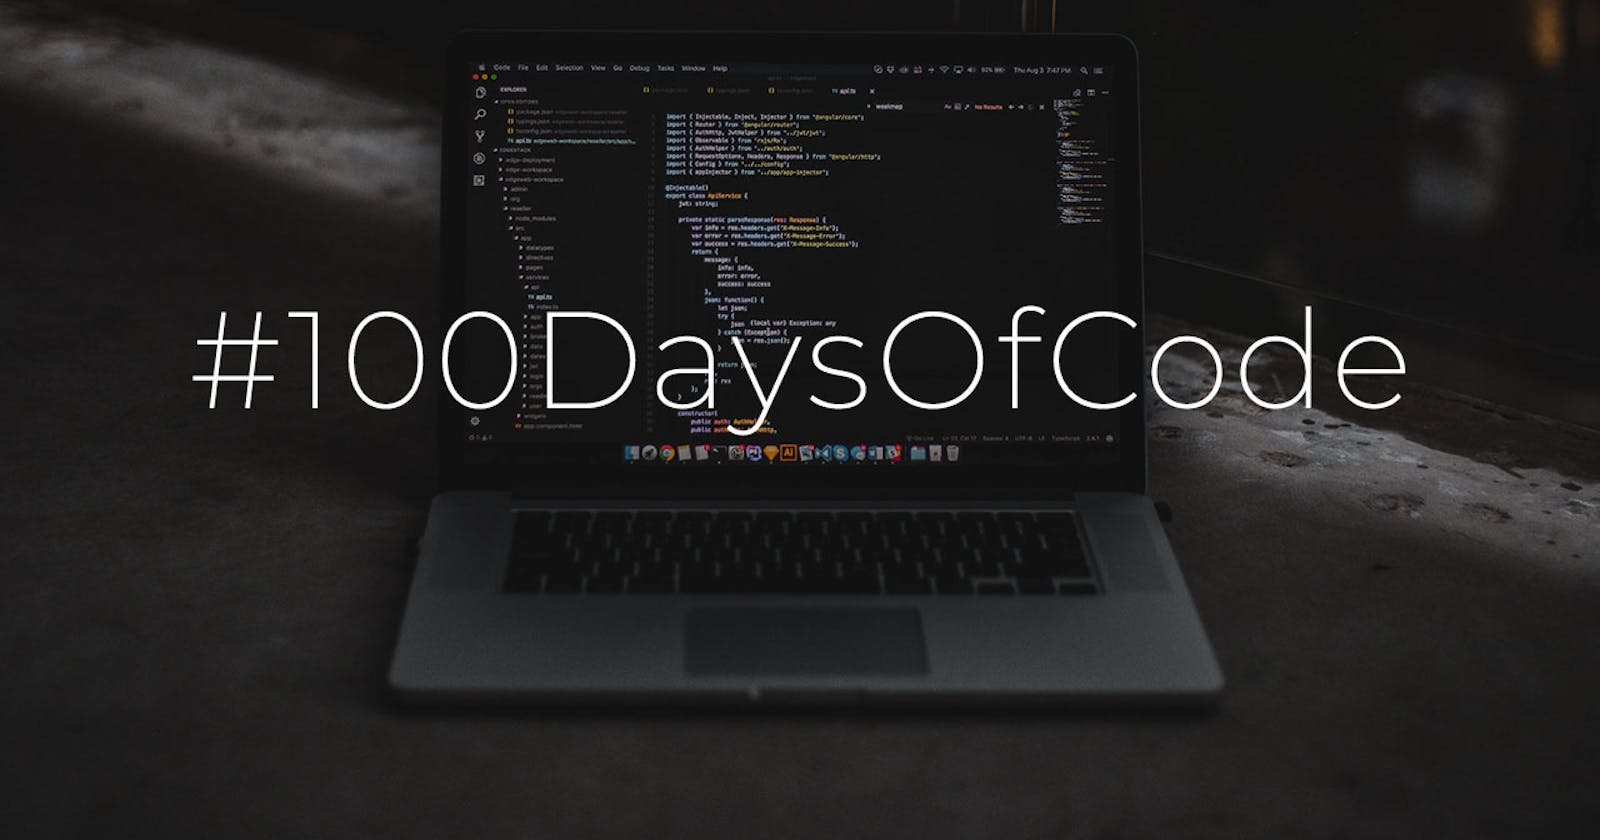 My #100daysofcode: Highlights